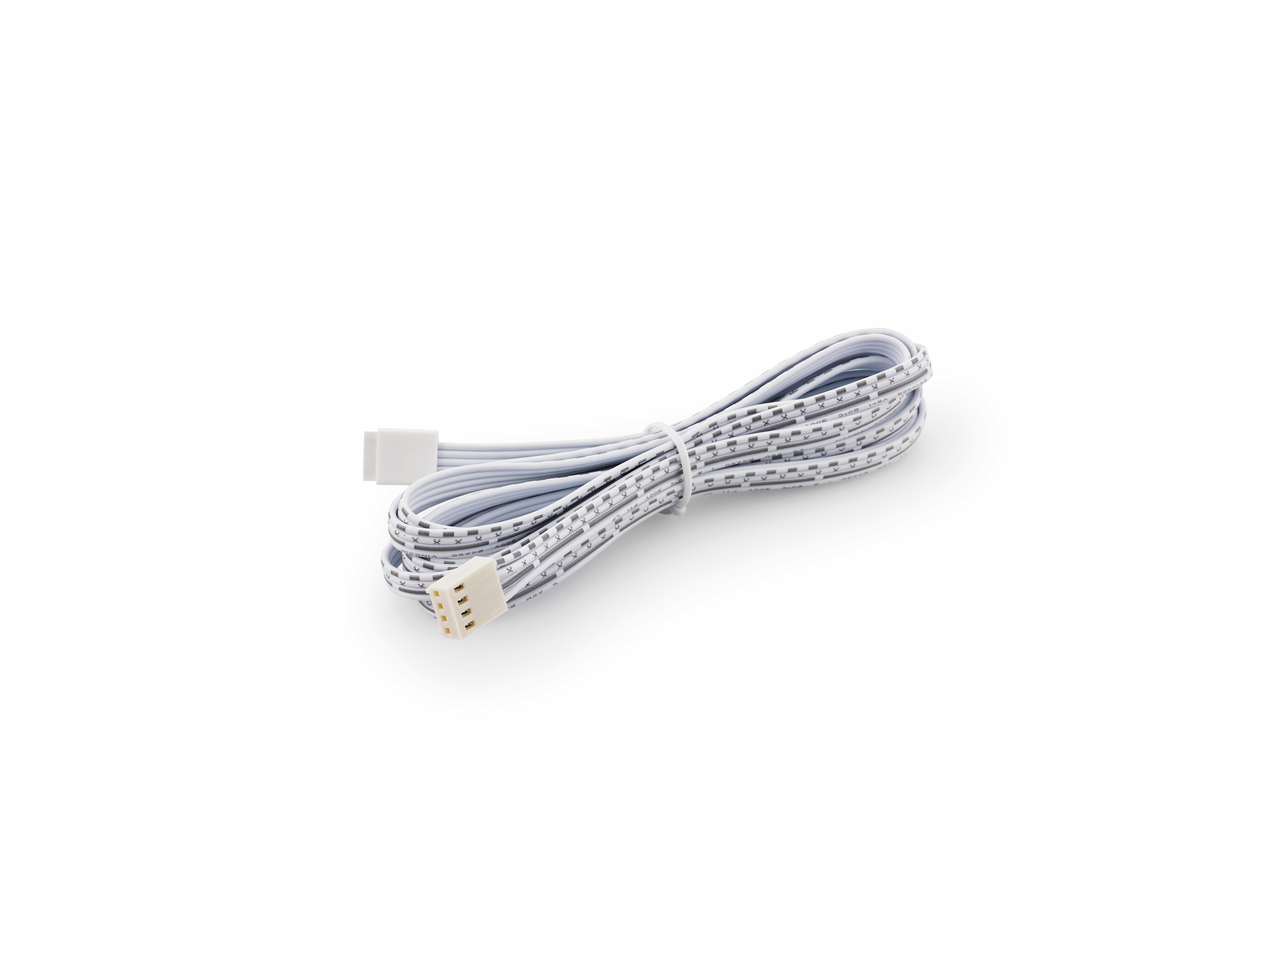  Câble de raccordement LED RGB, blanc